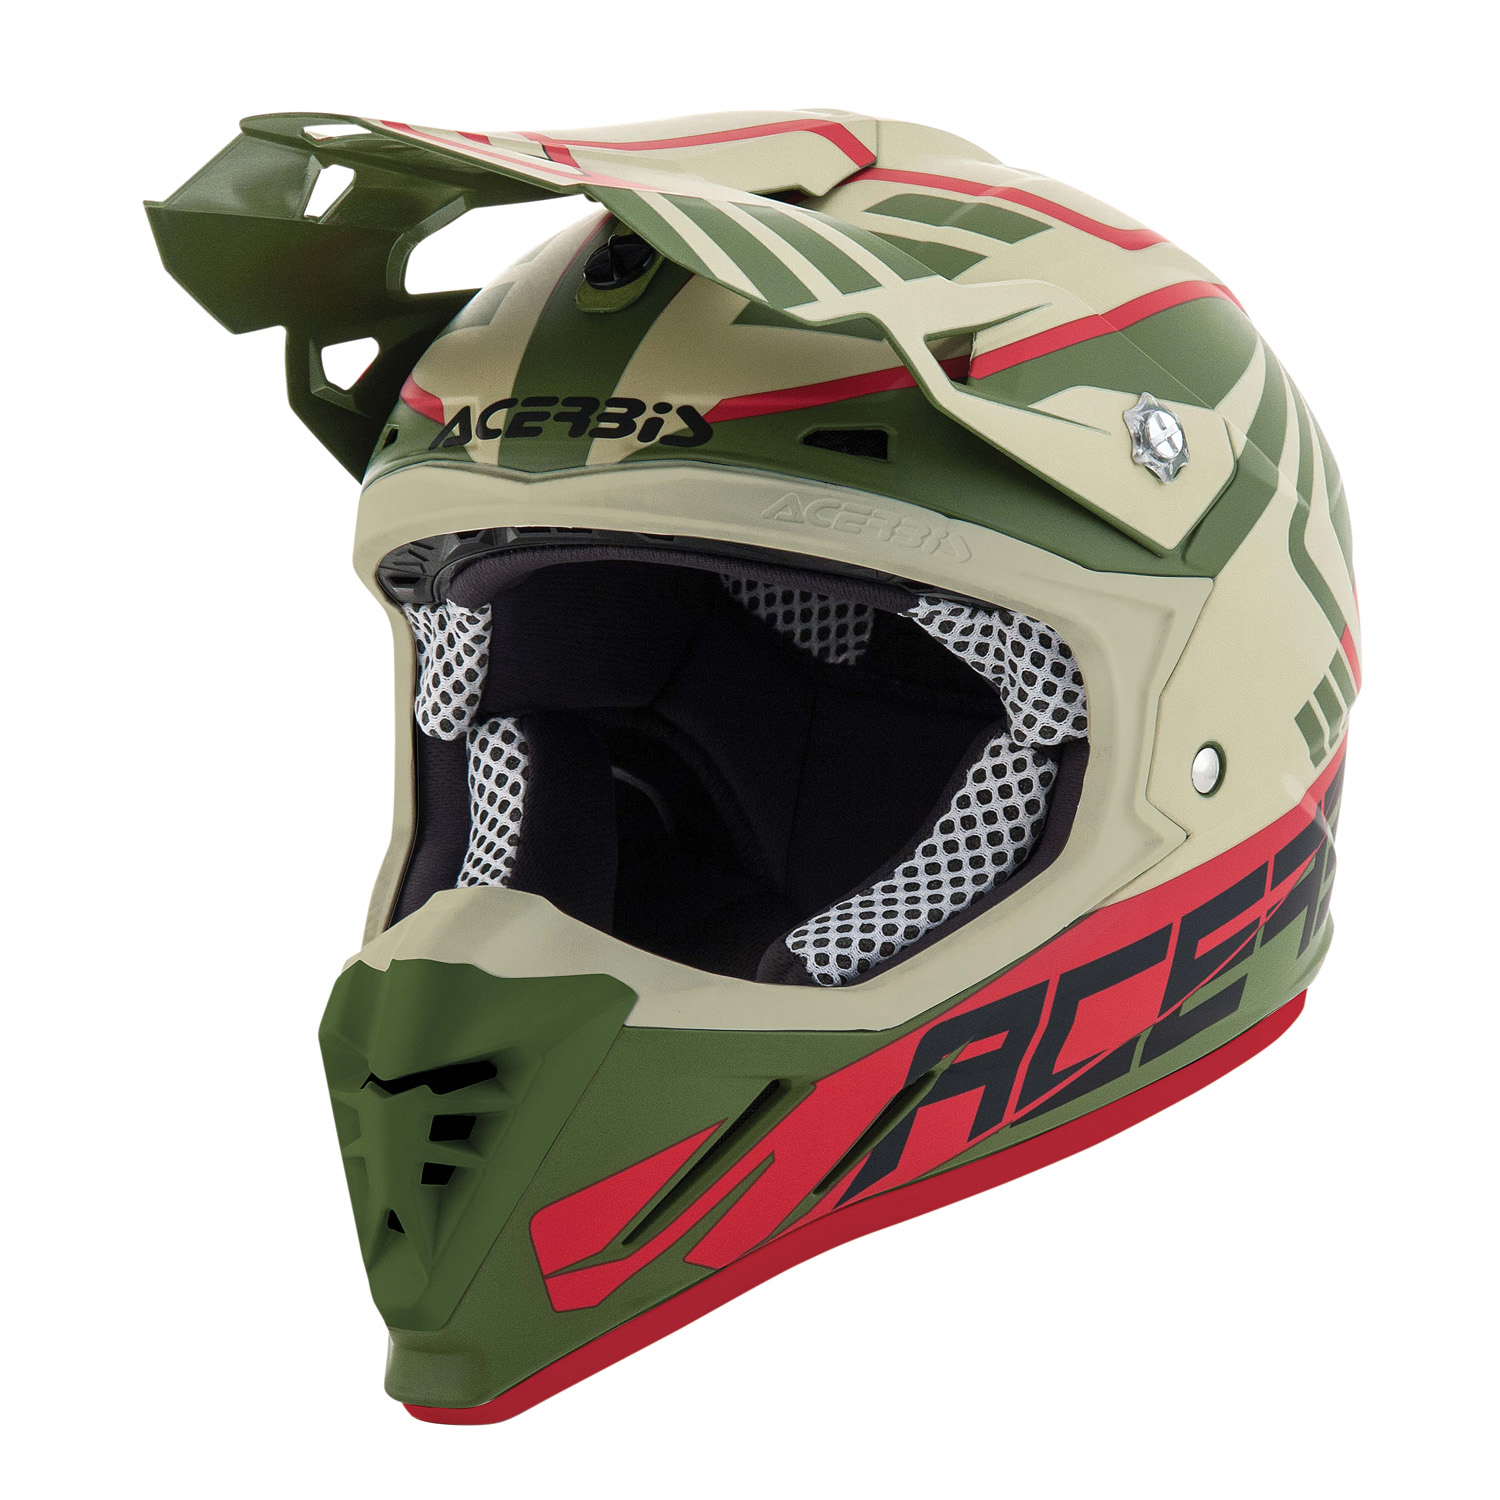 Acerbis Helmet Profile 3.0 Skinviper - Sand/Green